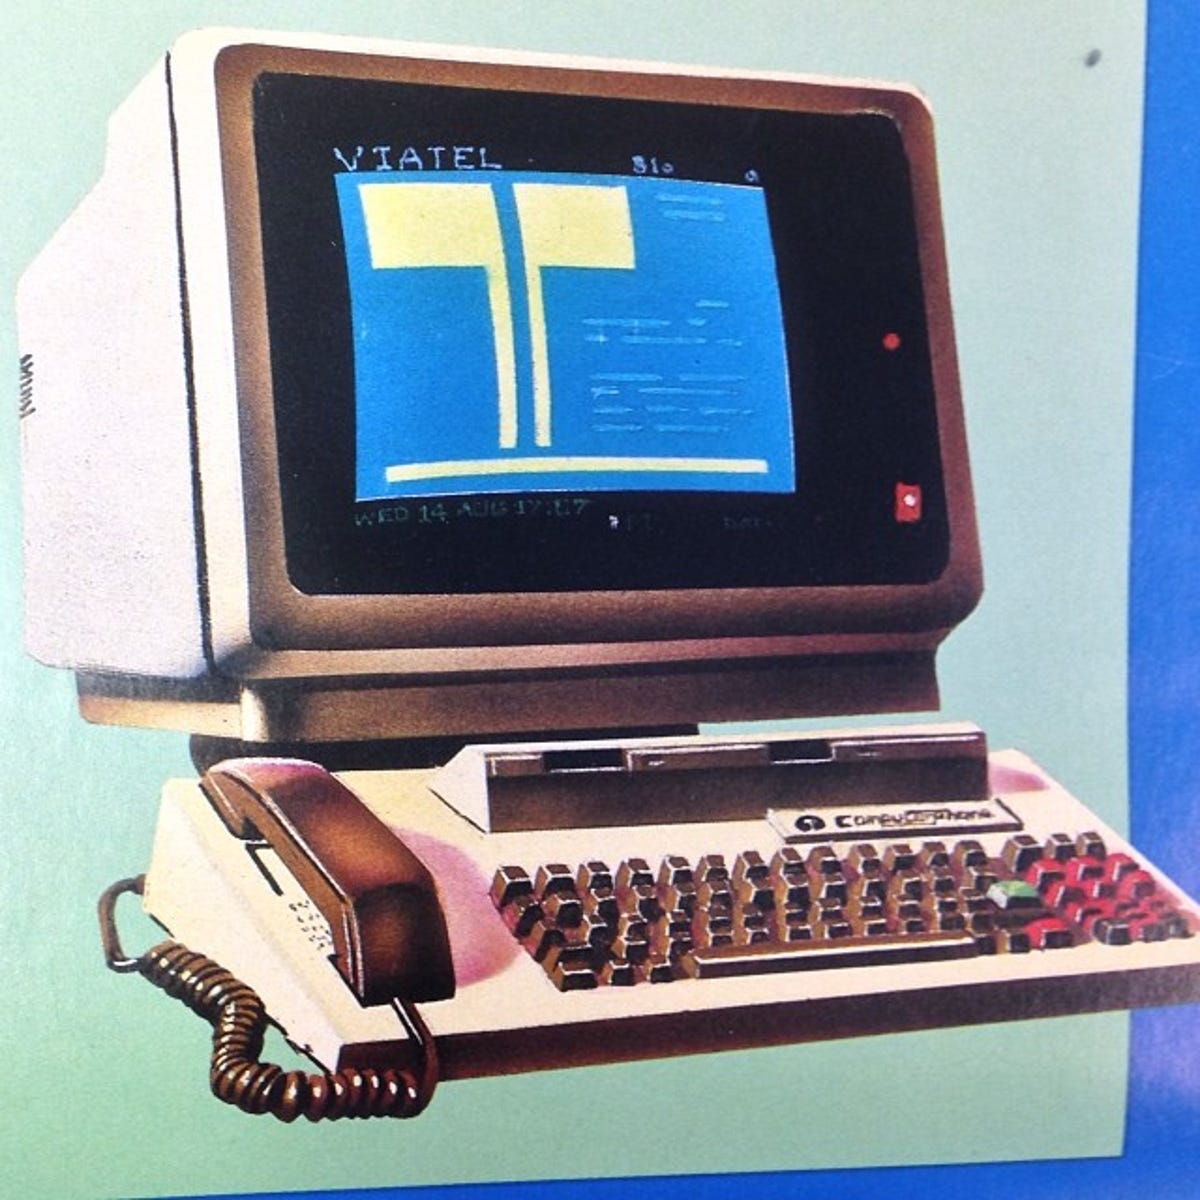 telstra-retro-computer-phone-1985.jpg